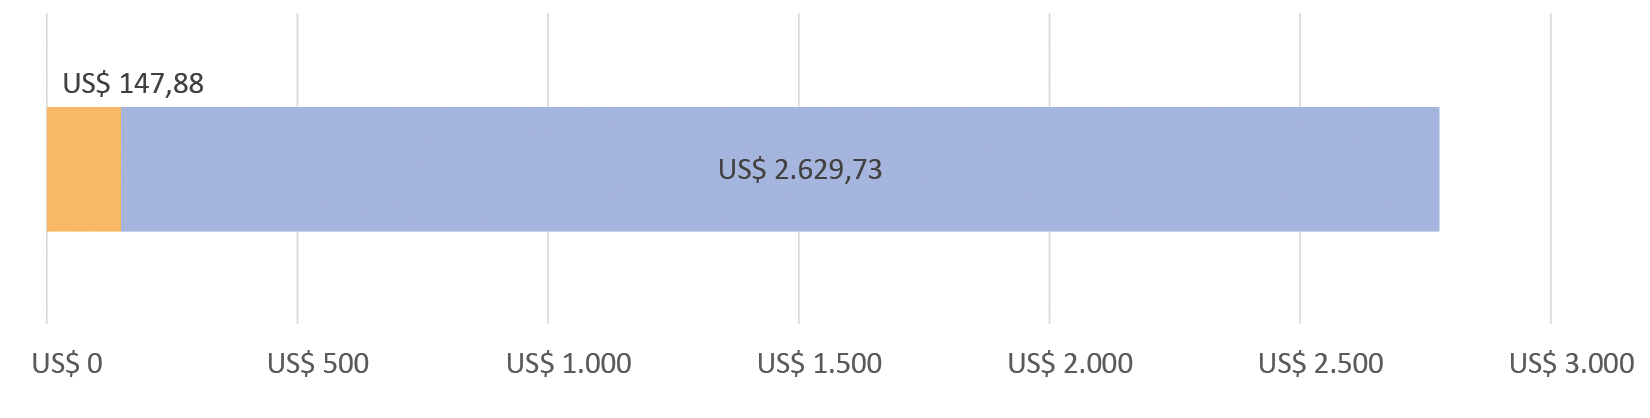 US$ 147,88 uitgegeven; US$ 2.629,73 resterend